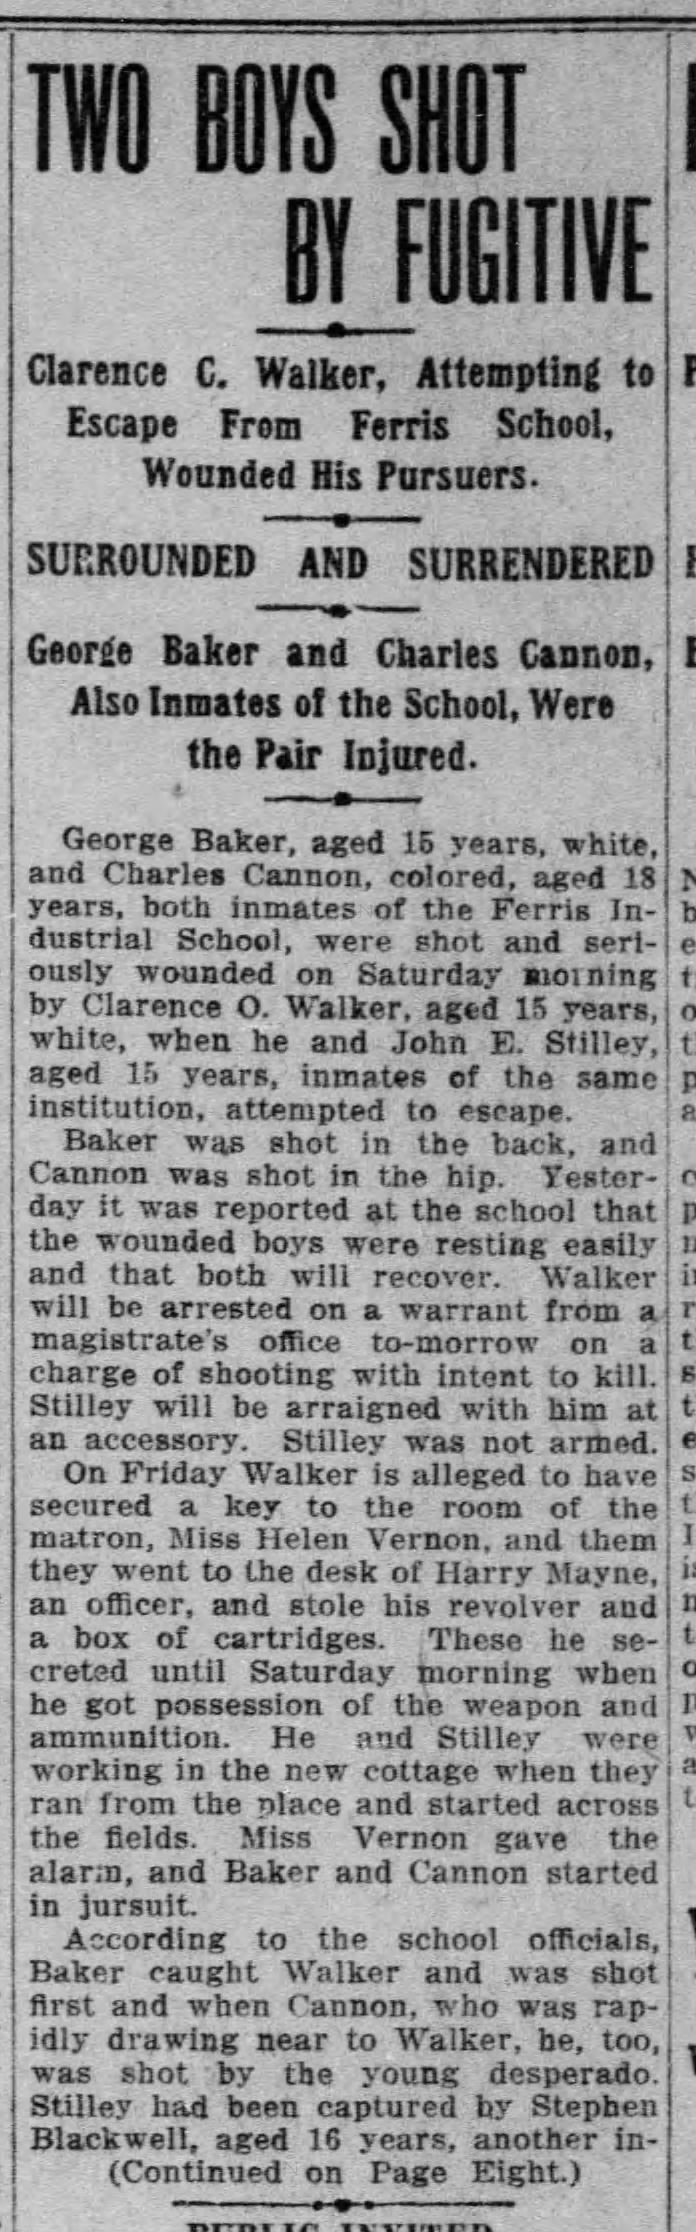 1910 Ferris boy shoots 2 boys while escaping; pt 1